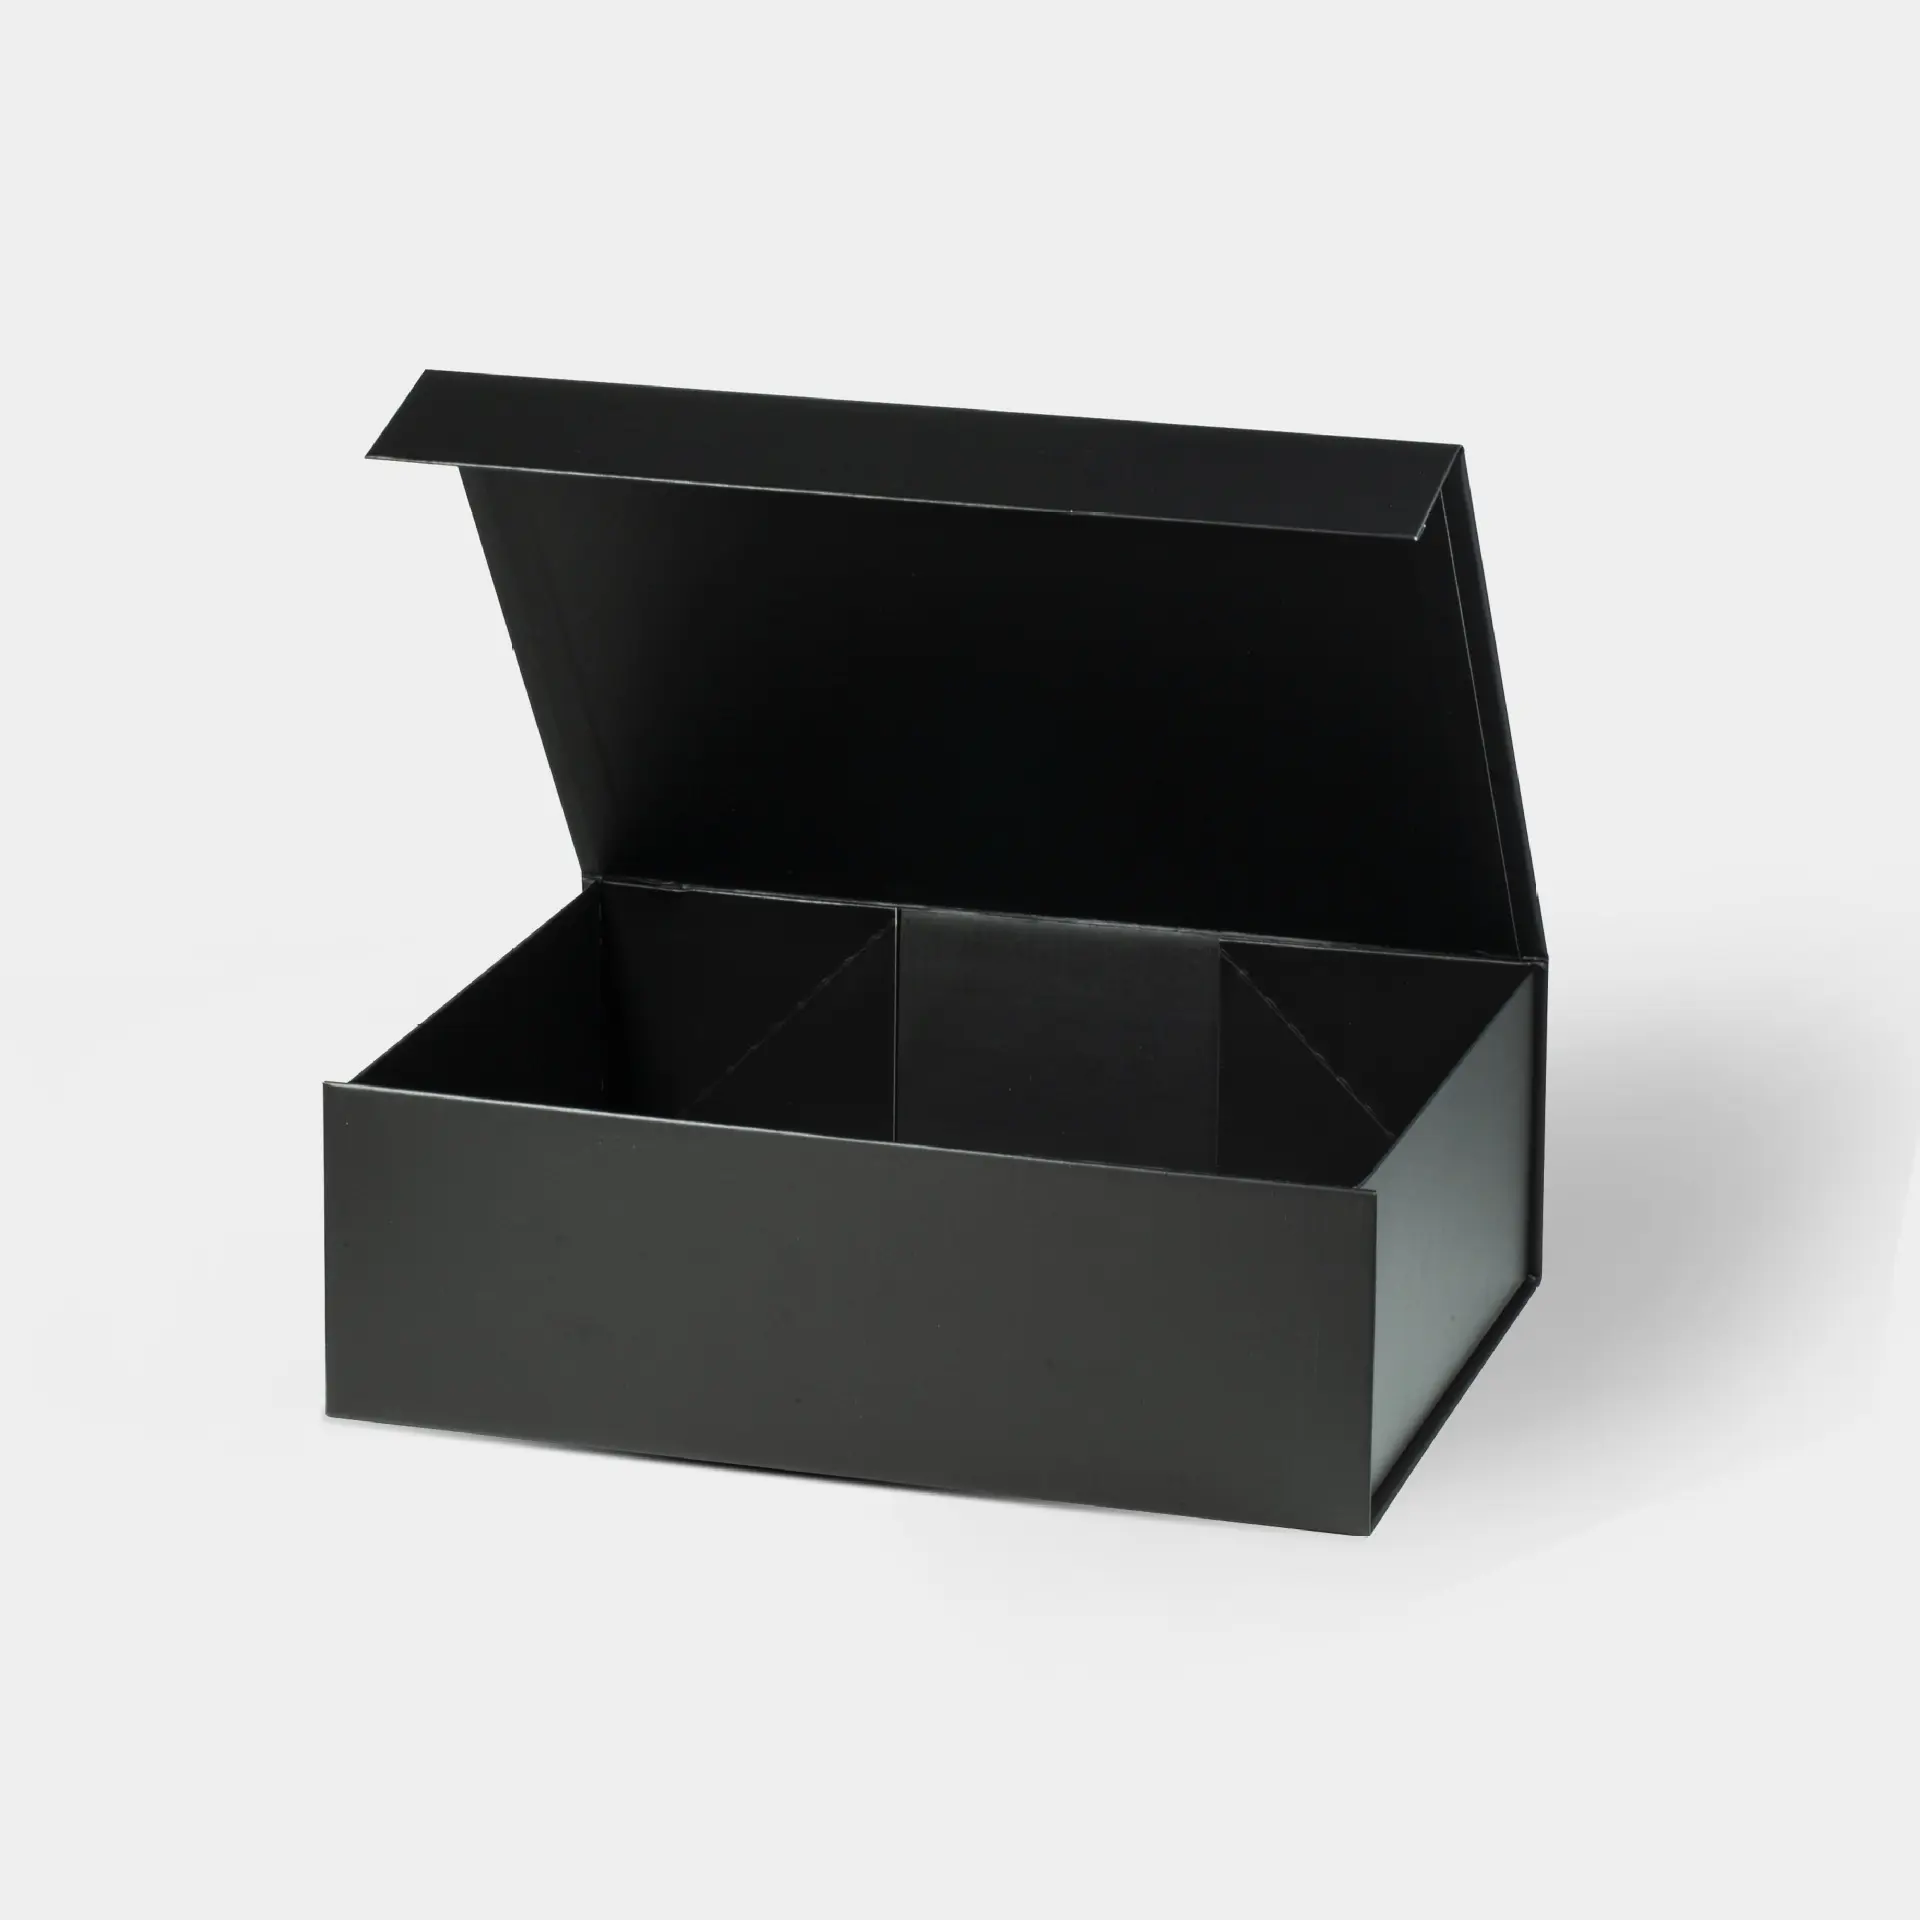 Изготовленная на заказ Роскошная матовая черная упаковка складная бумажная коробка Магнитная Складная Подарочная коробка с магнитной крышкой